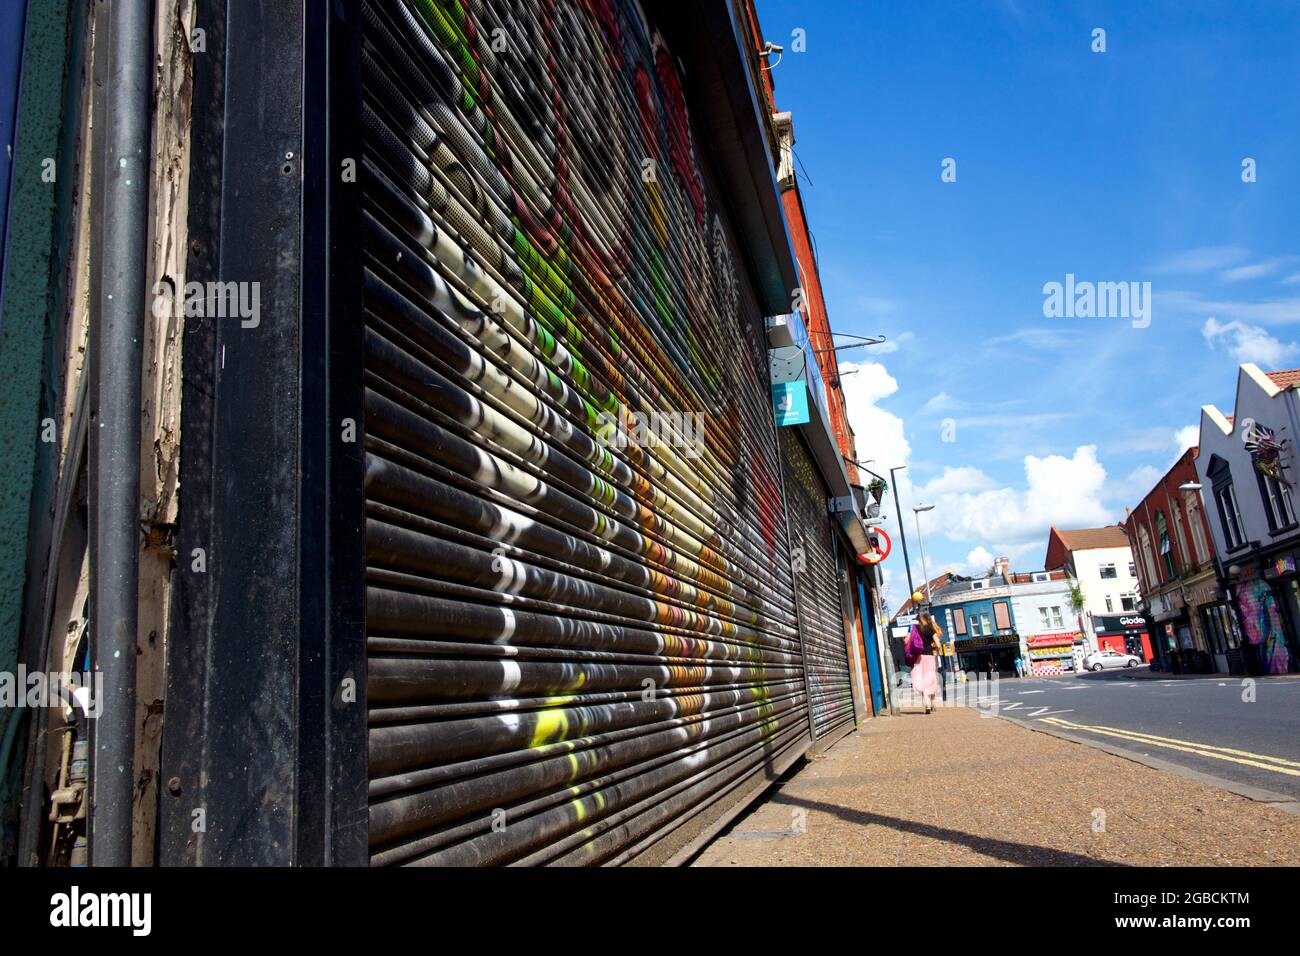 Shuttered shops on a high street, UK Stock Photo